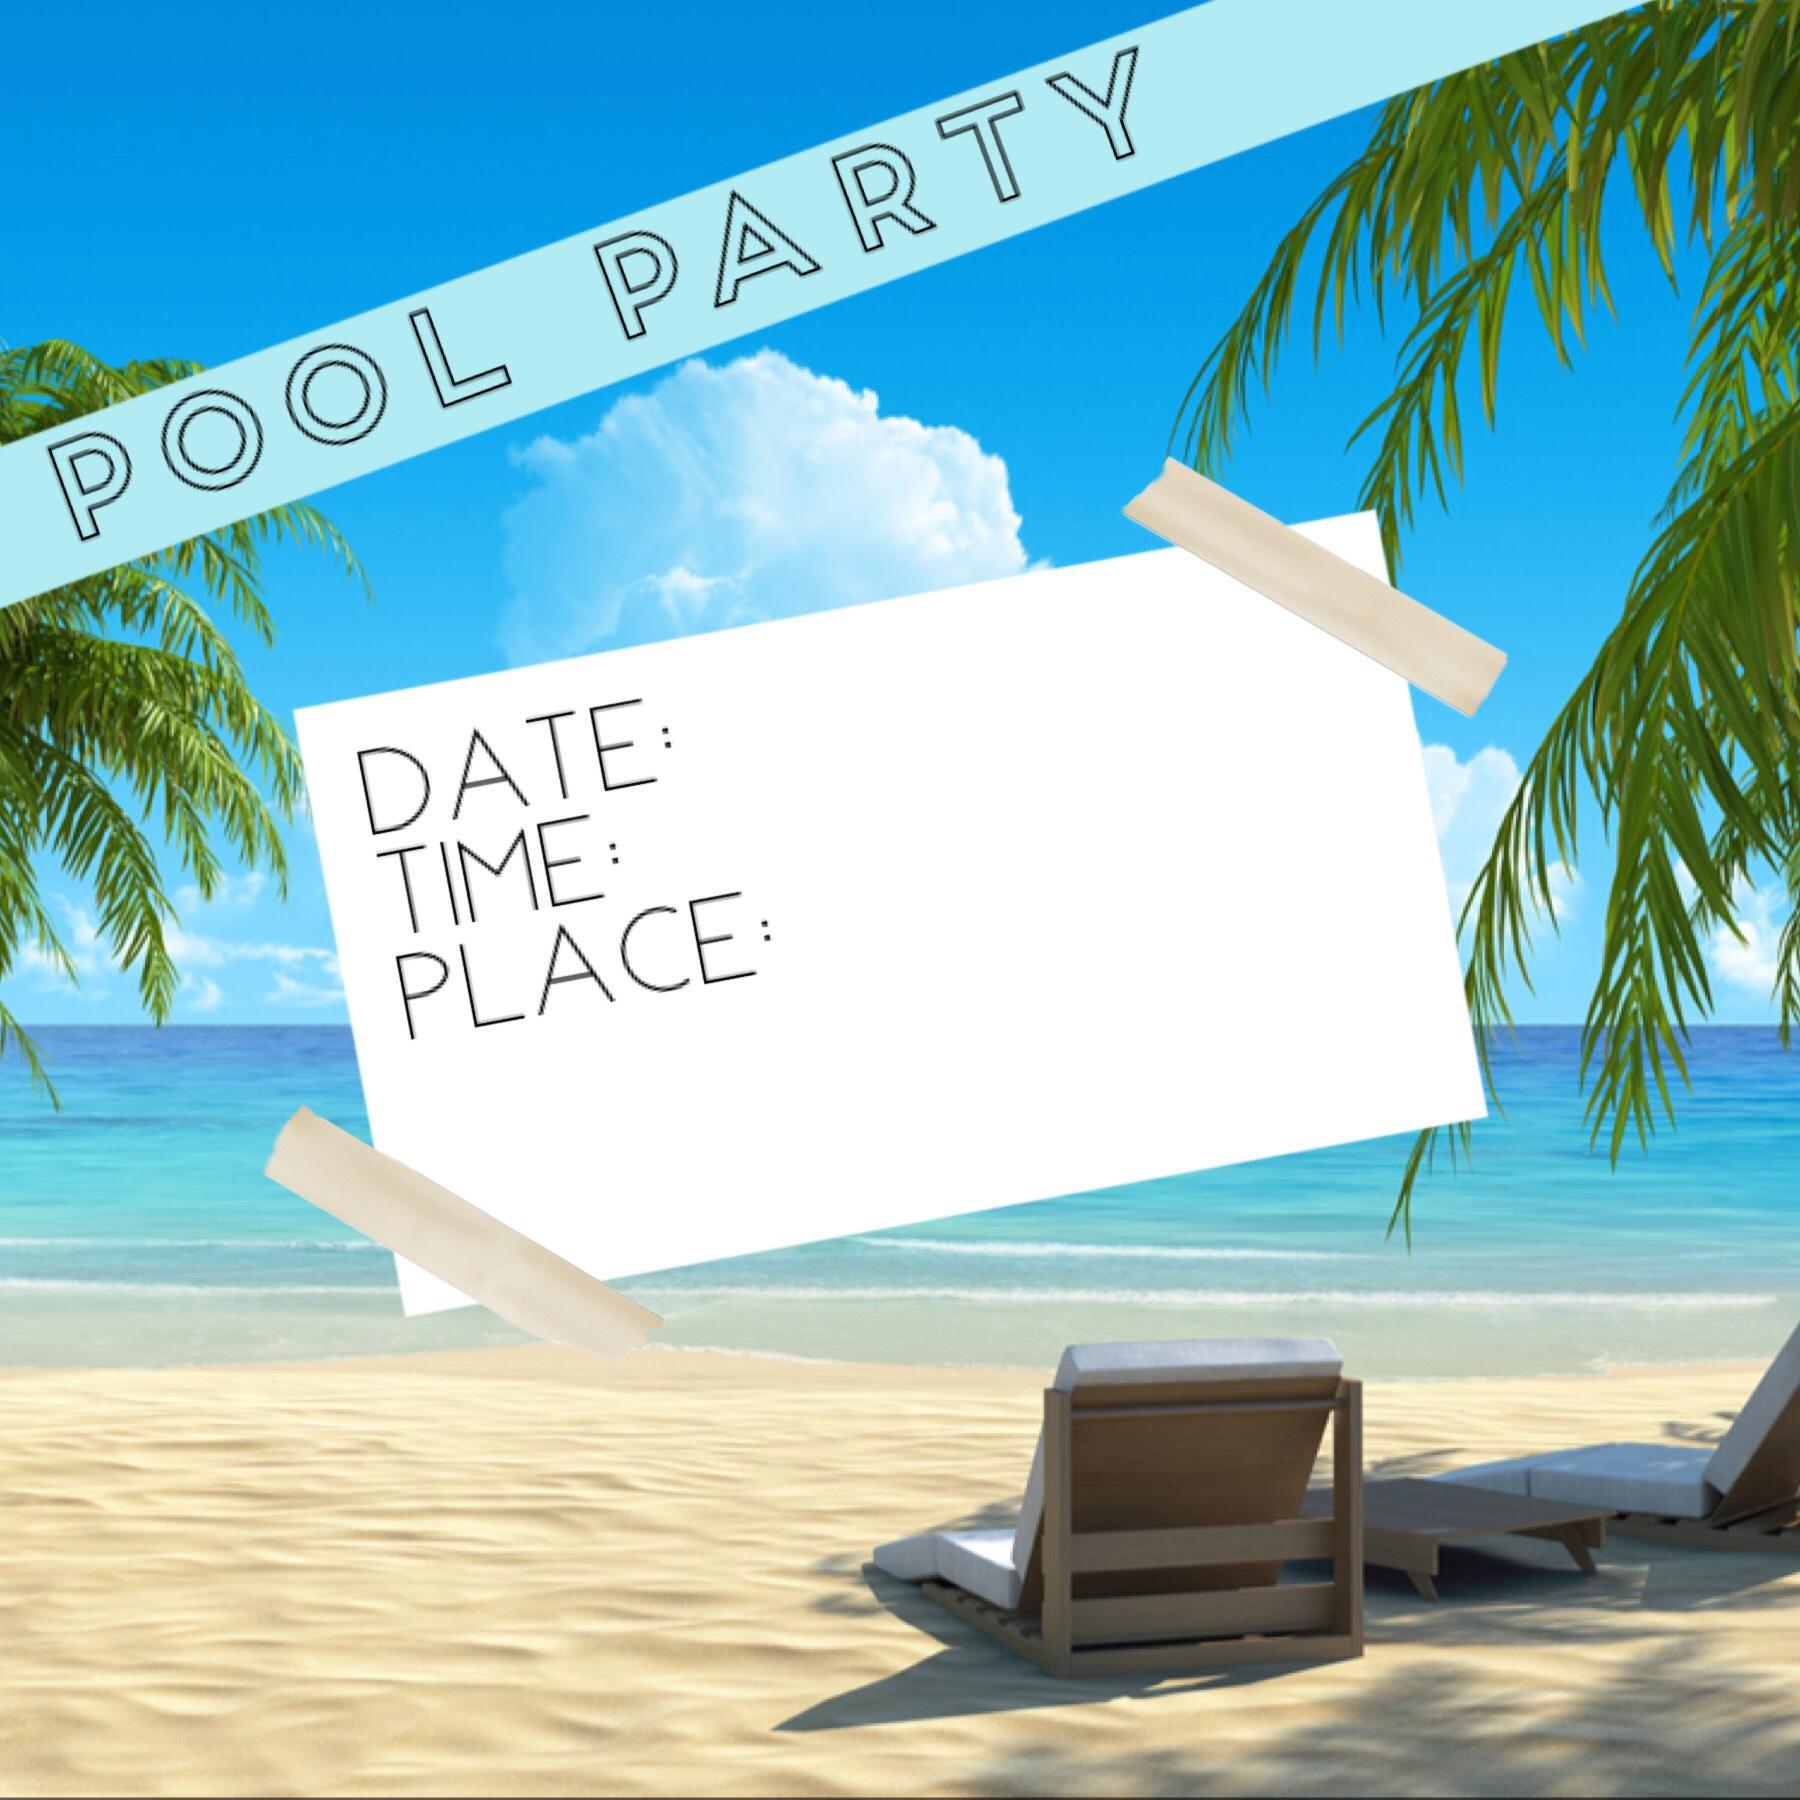 Pool party invite 